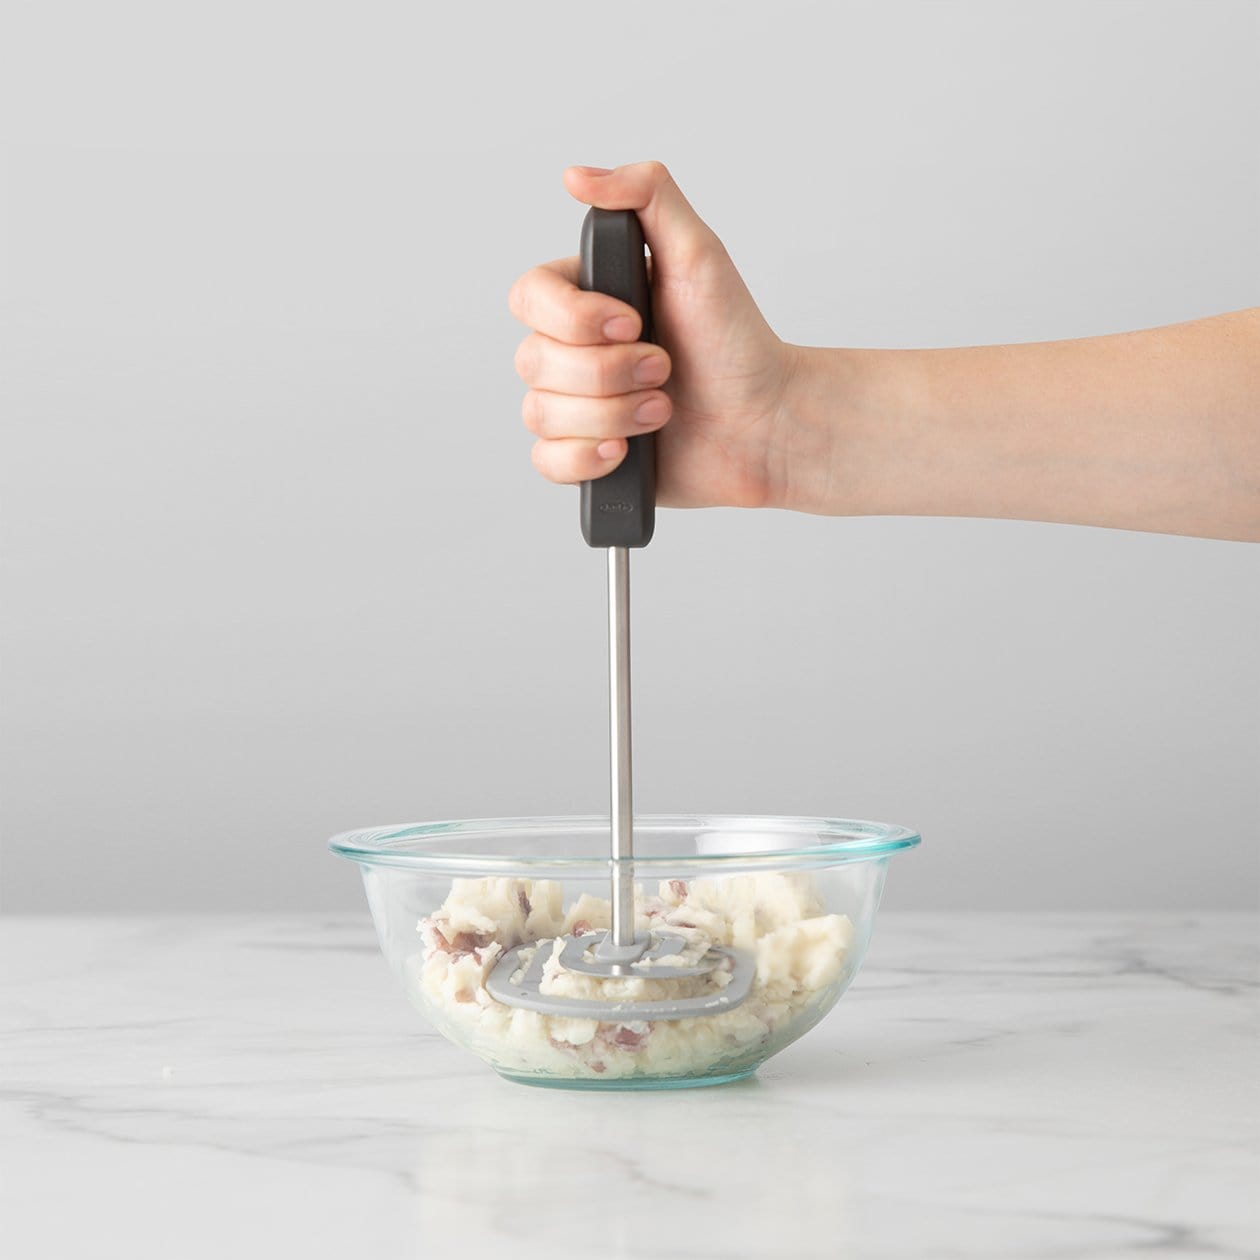 KSENDALO Multifunctional Kitchen Cooking Tool – Potato Masher, Avocado  Masher, Bean Masher - Nonstick Degradable Nylon Blade with Comfortable  Rubber